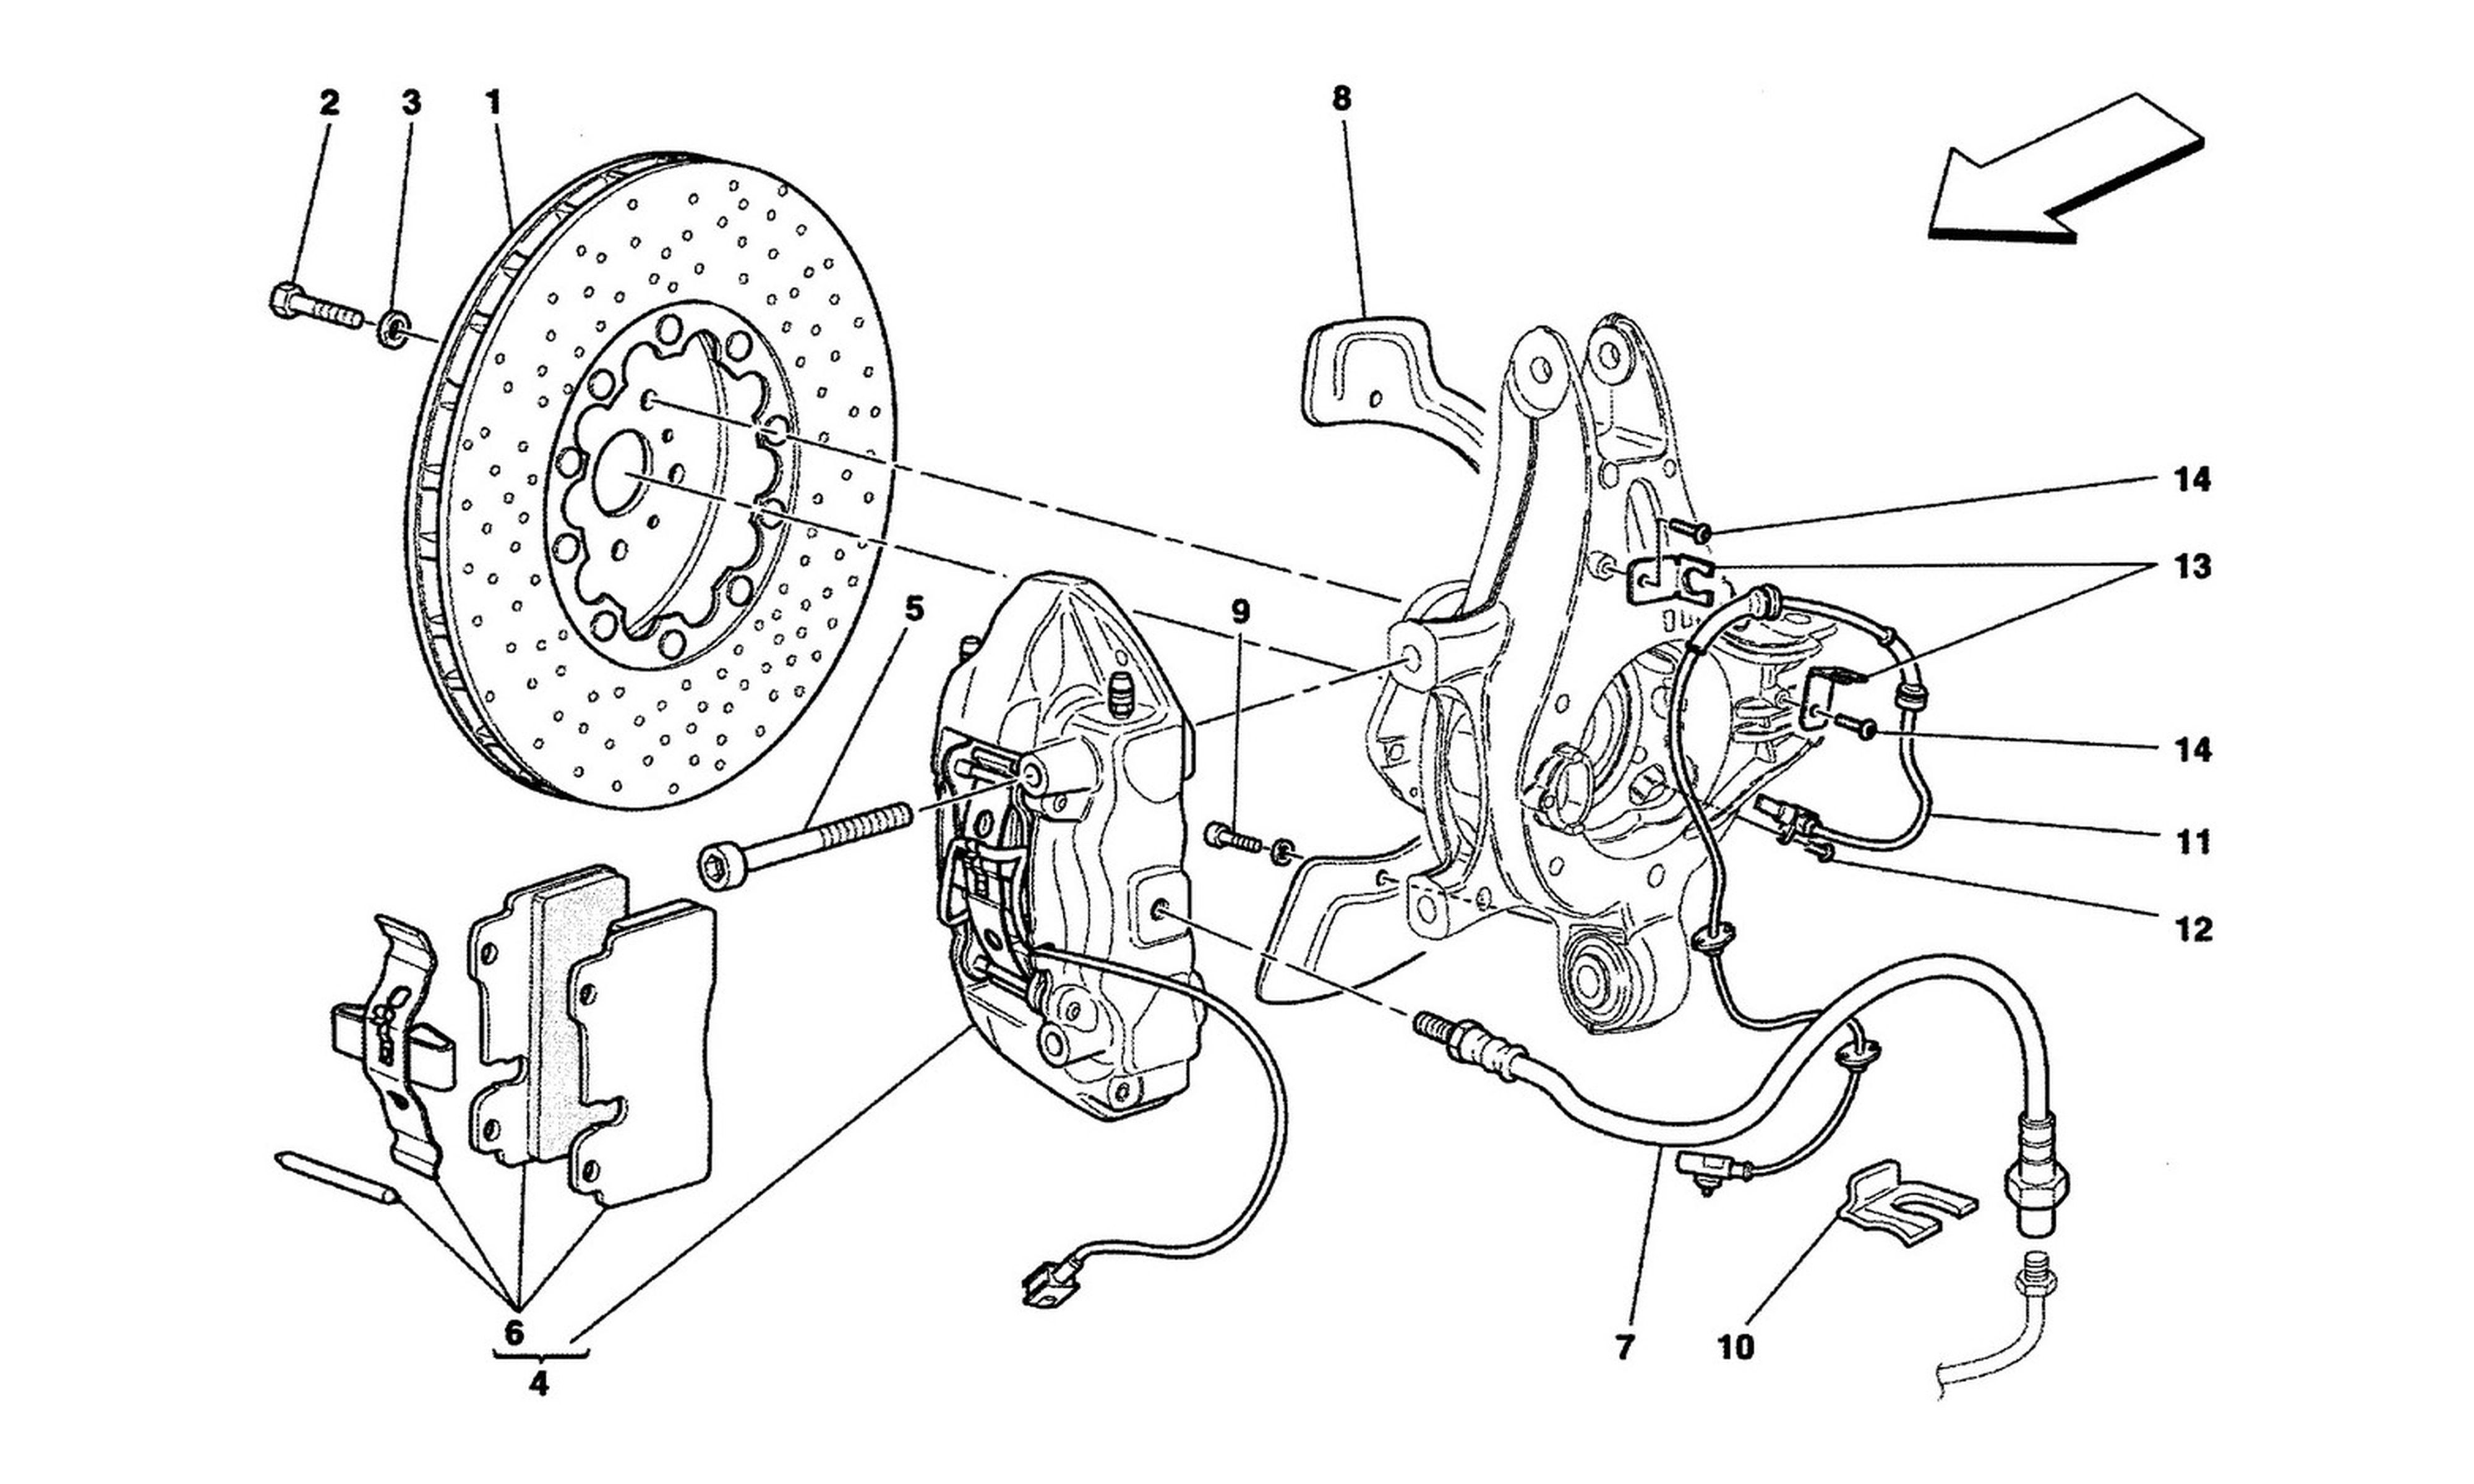 Schematic: Braking Devices On Rear Wheels